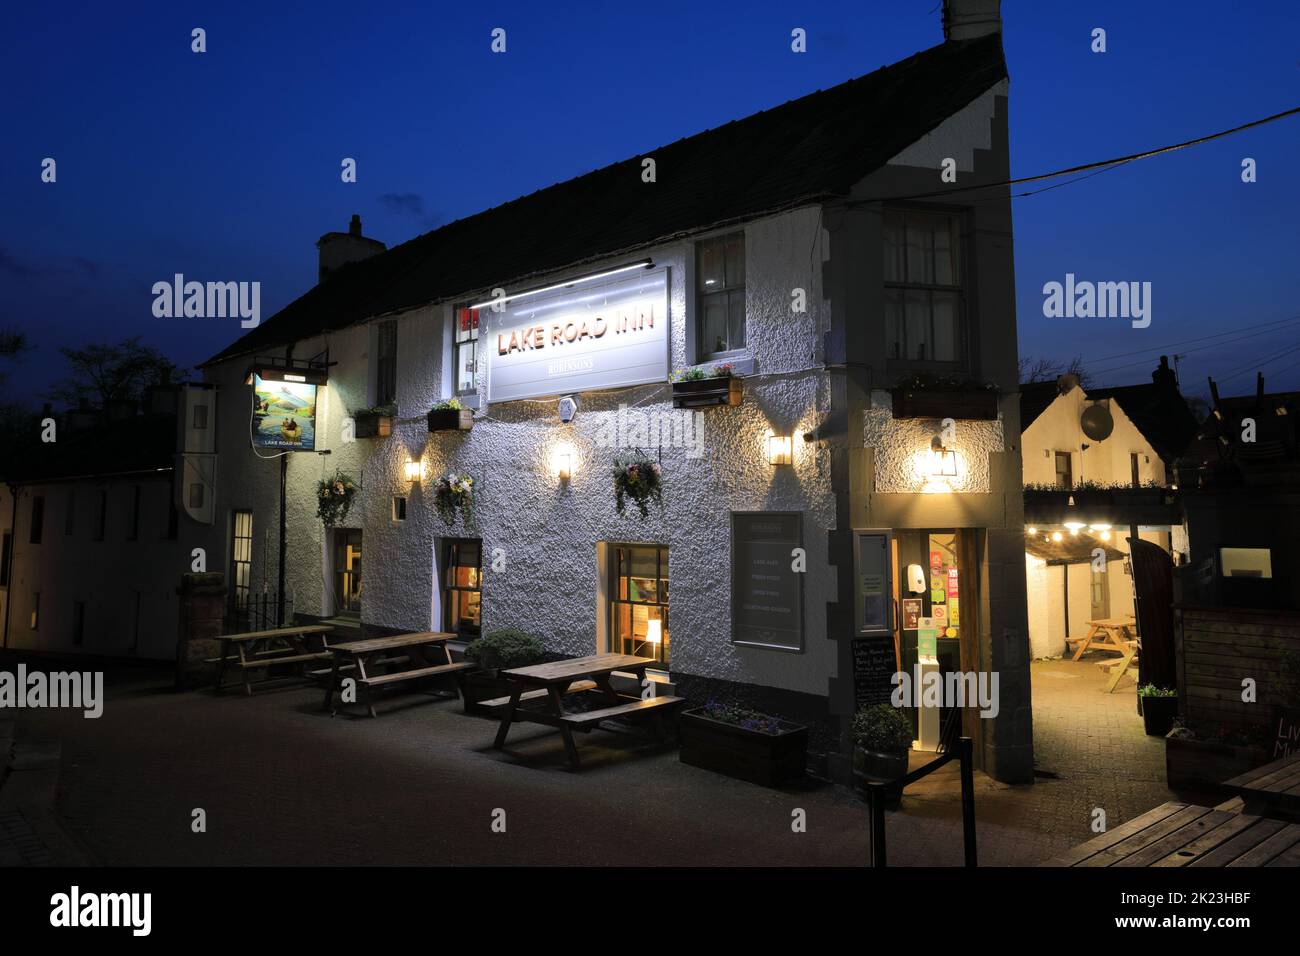 The Lake Road Inn Pub, Keswick town, Lake District National Park, Cumbria County, England, UK Stock Photo